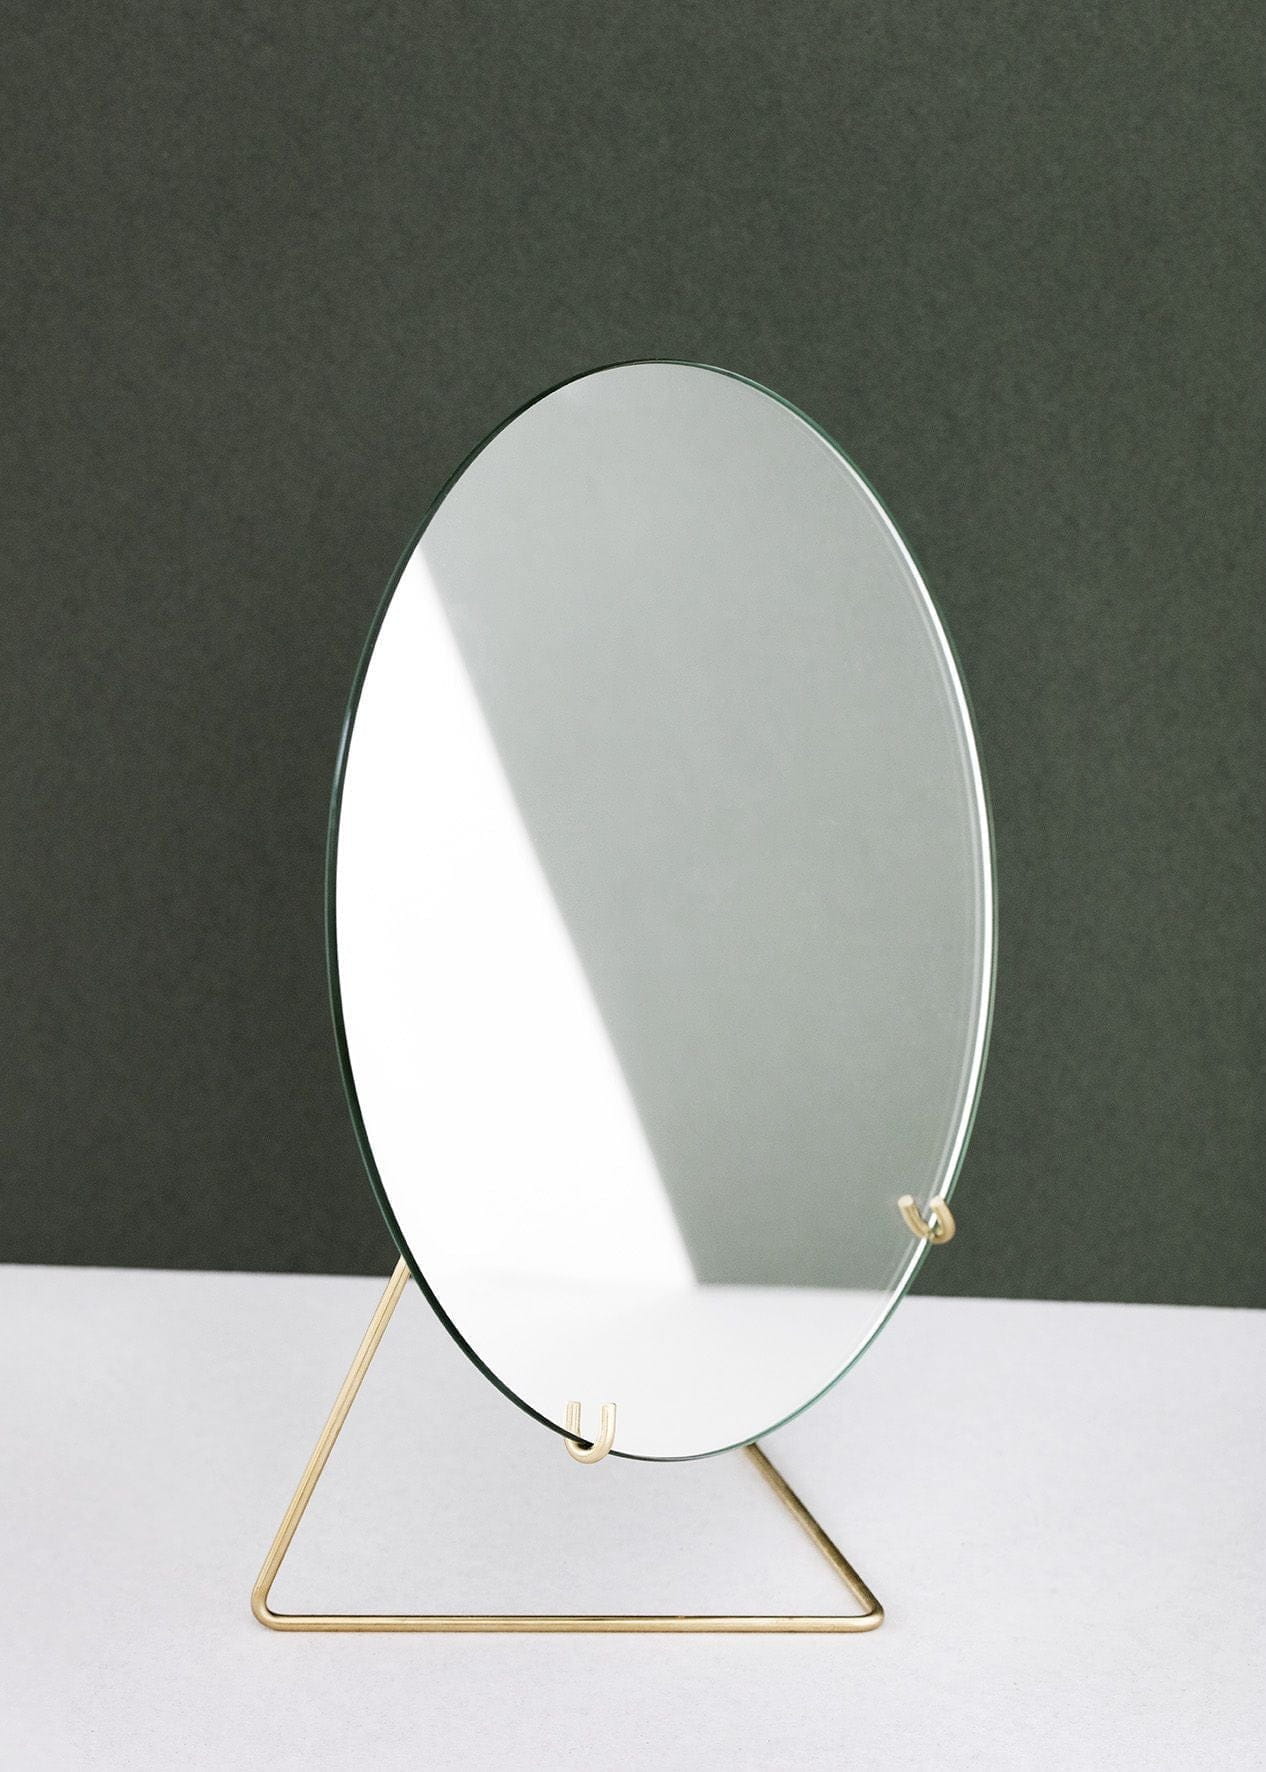 Moebe Stående spegelspegel Ø30 cm, mässing